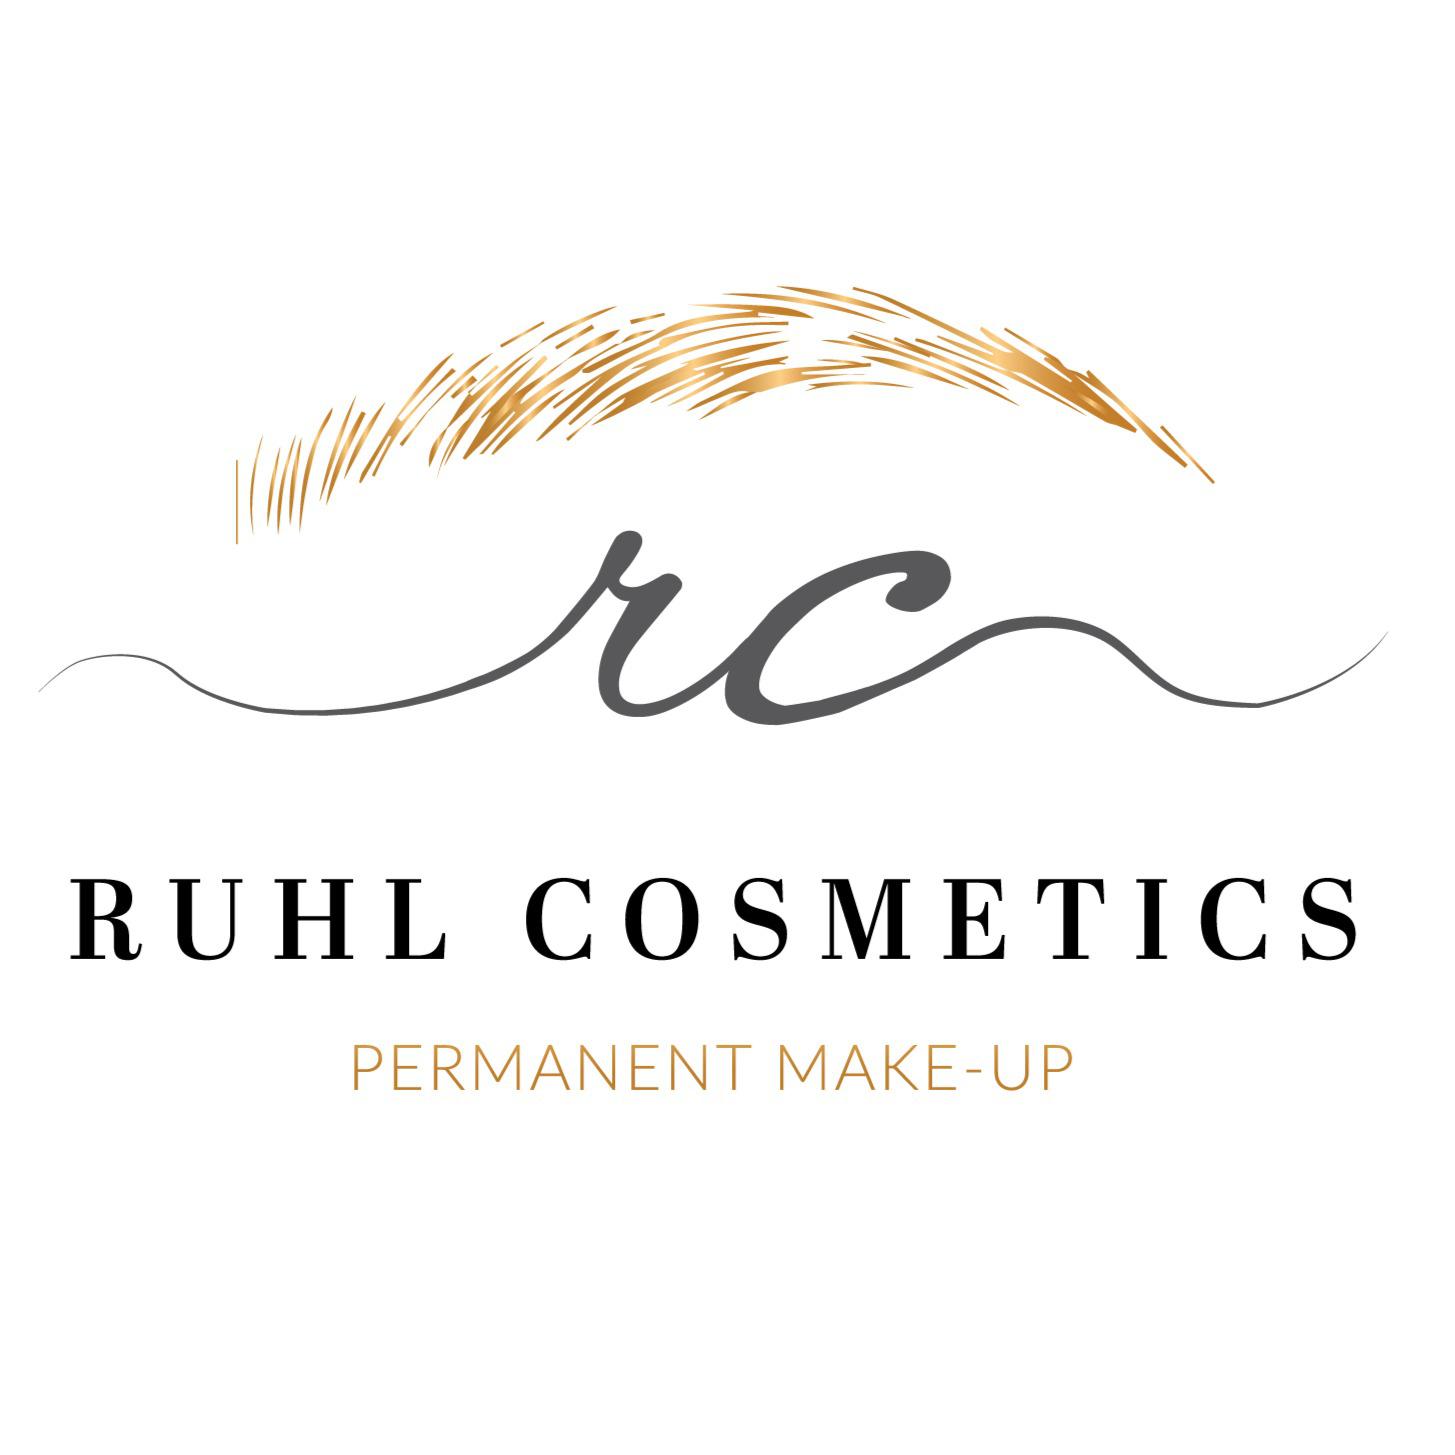 Ruhl_Cosmetics Logo